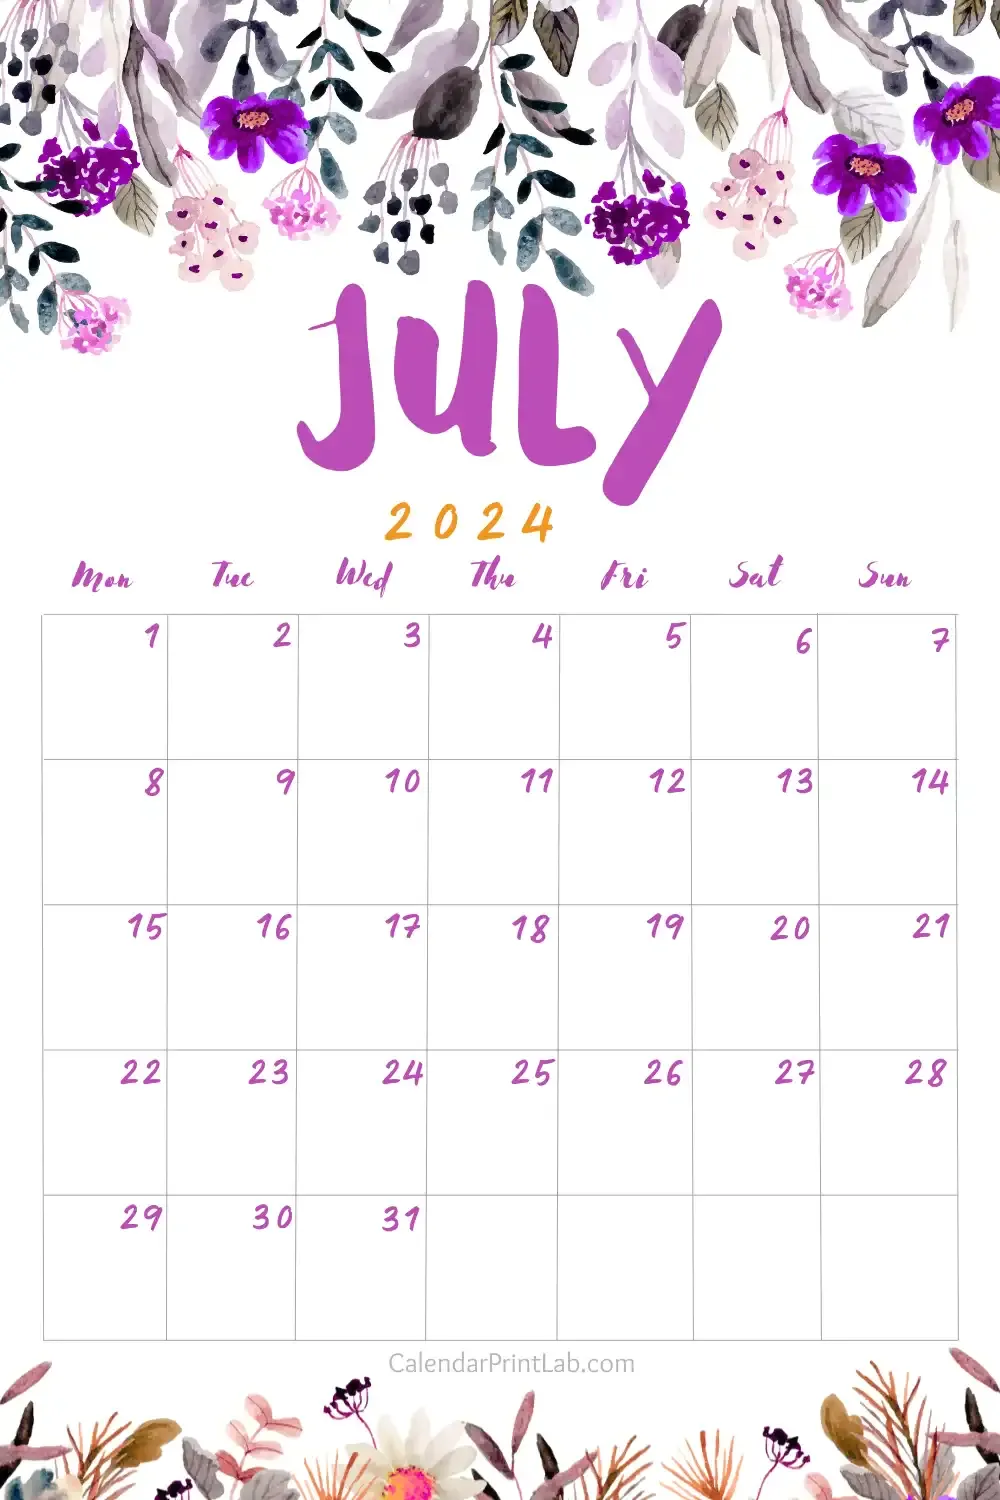 July 2024 Floral Calendar Printable